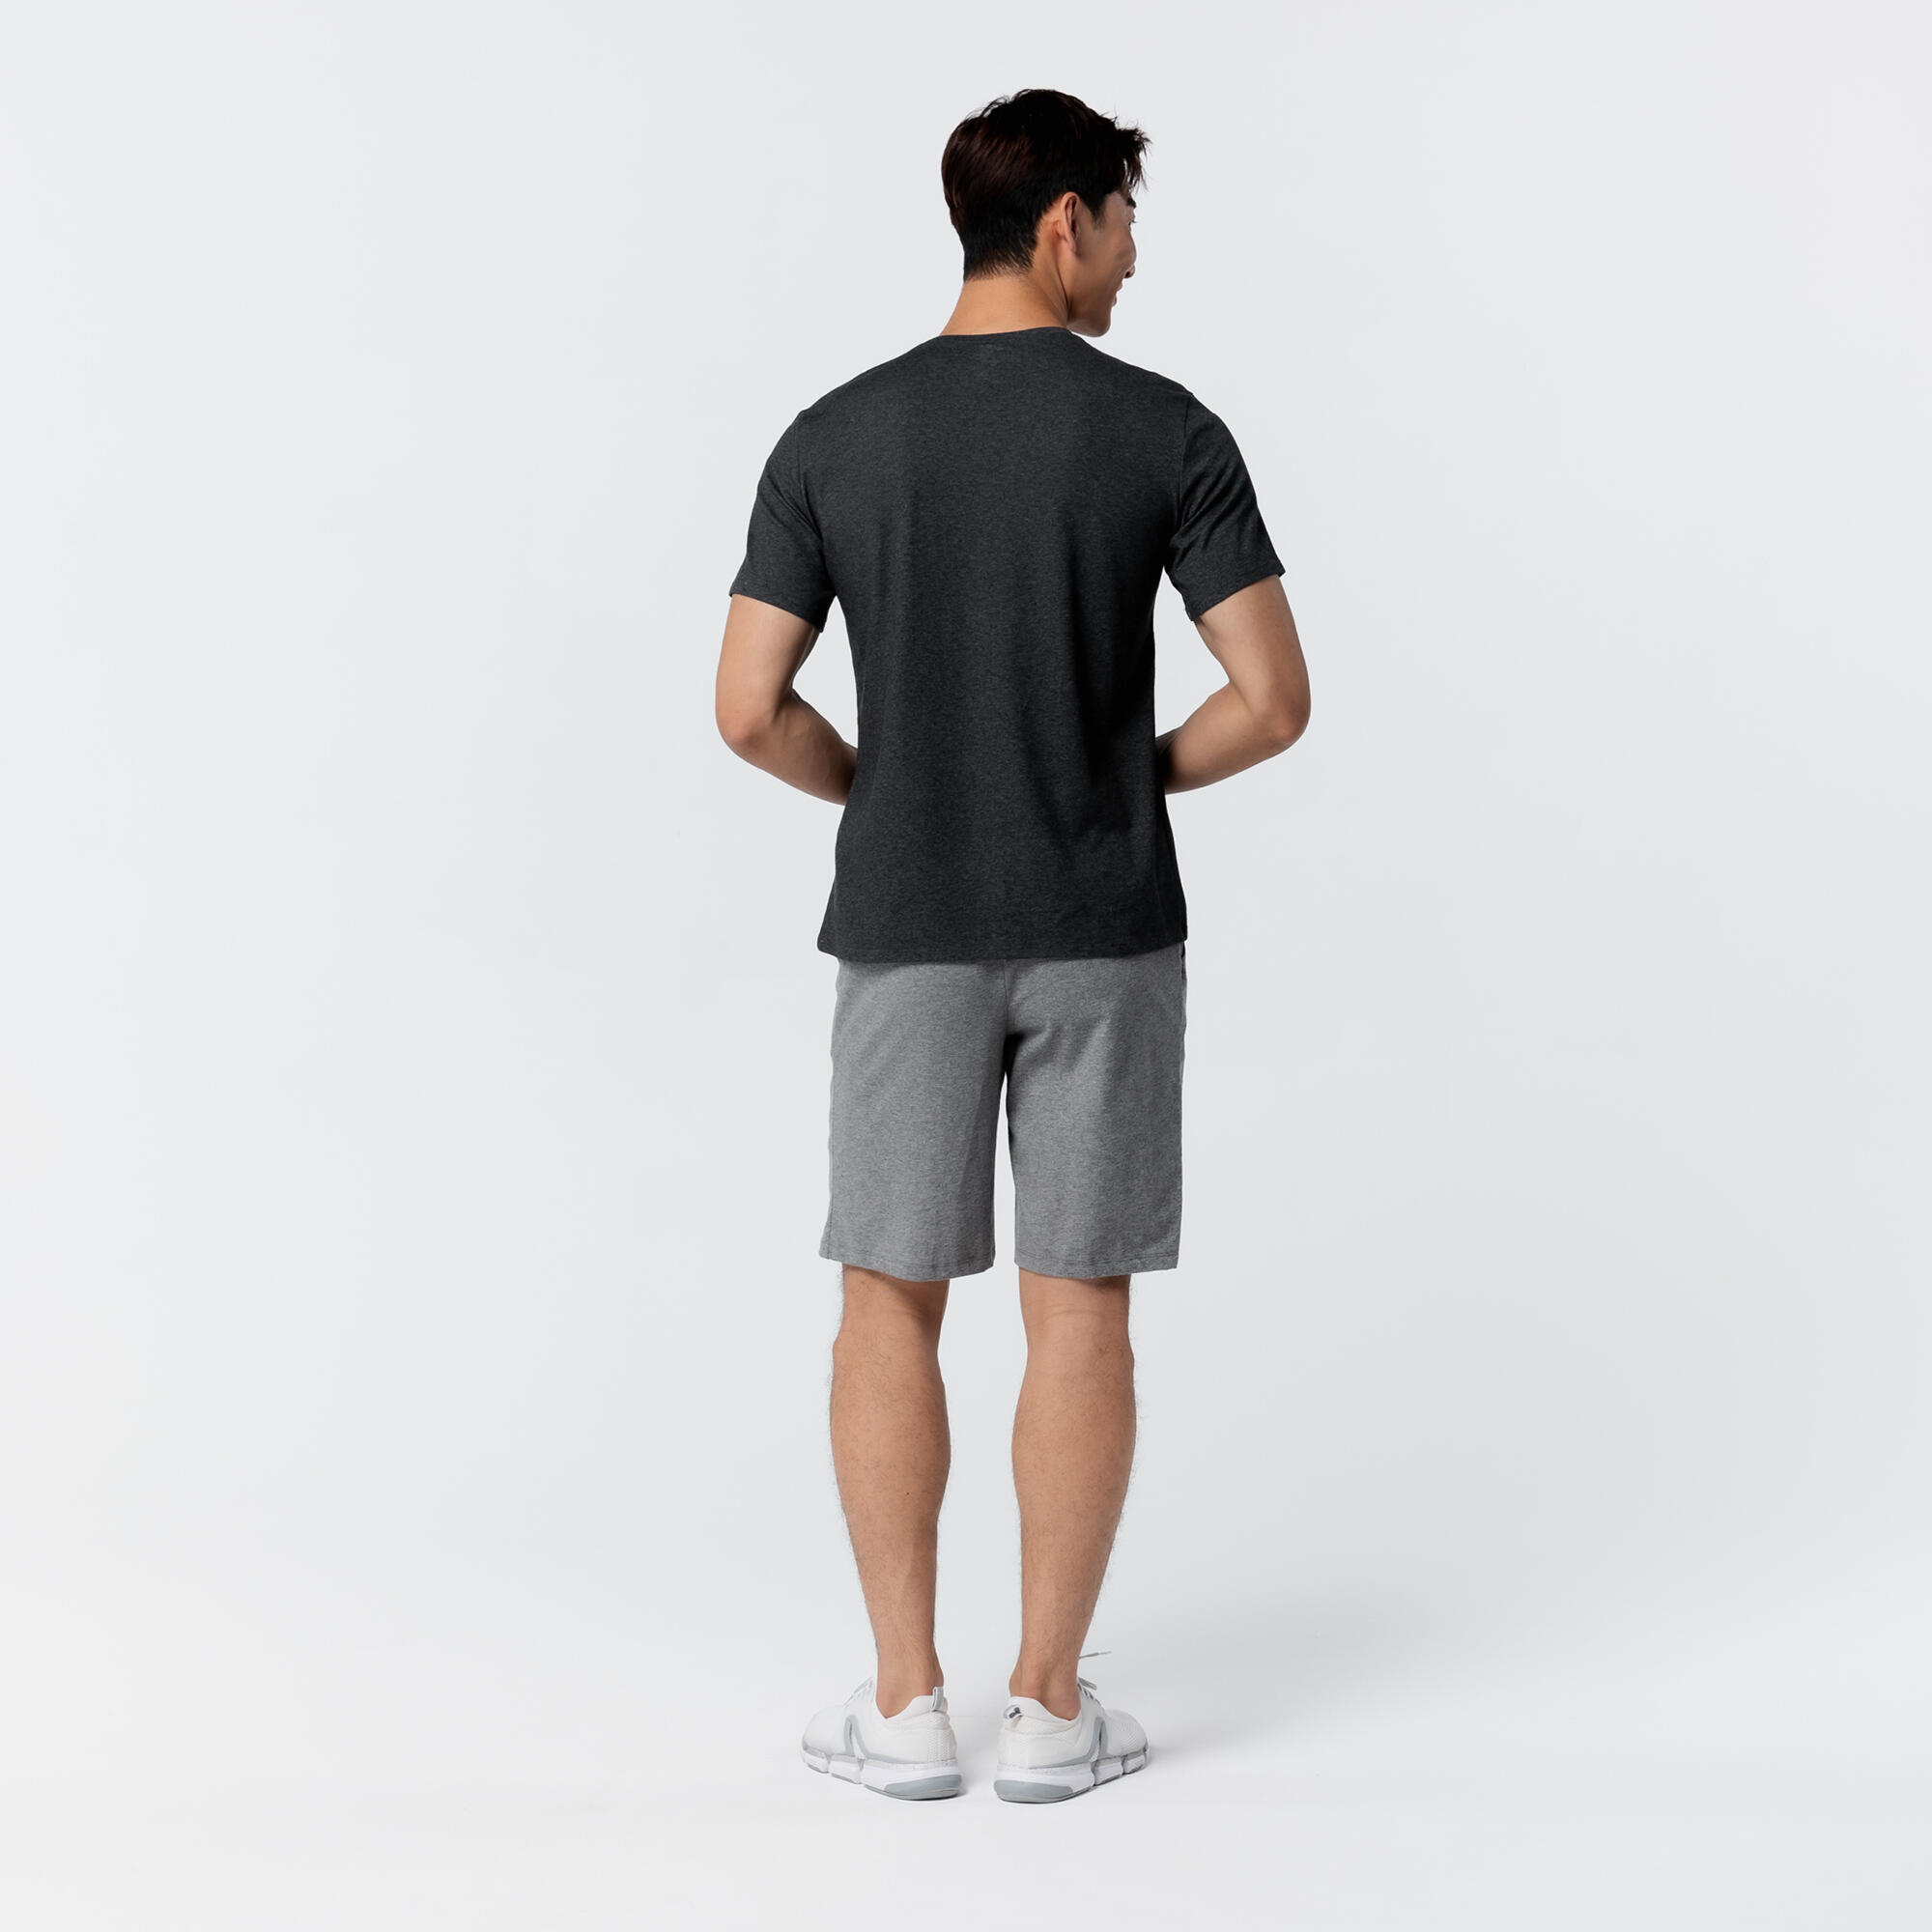 Men's Short-Sleeved Straight-Cut Crew Neck Cotton Fitness T-Shirt 500 - Grey 8/21